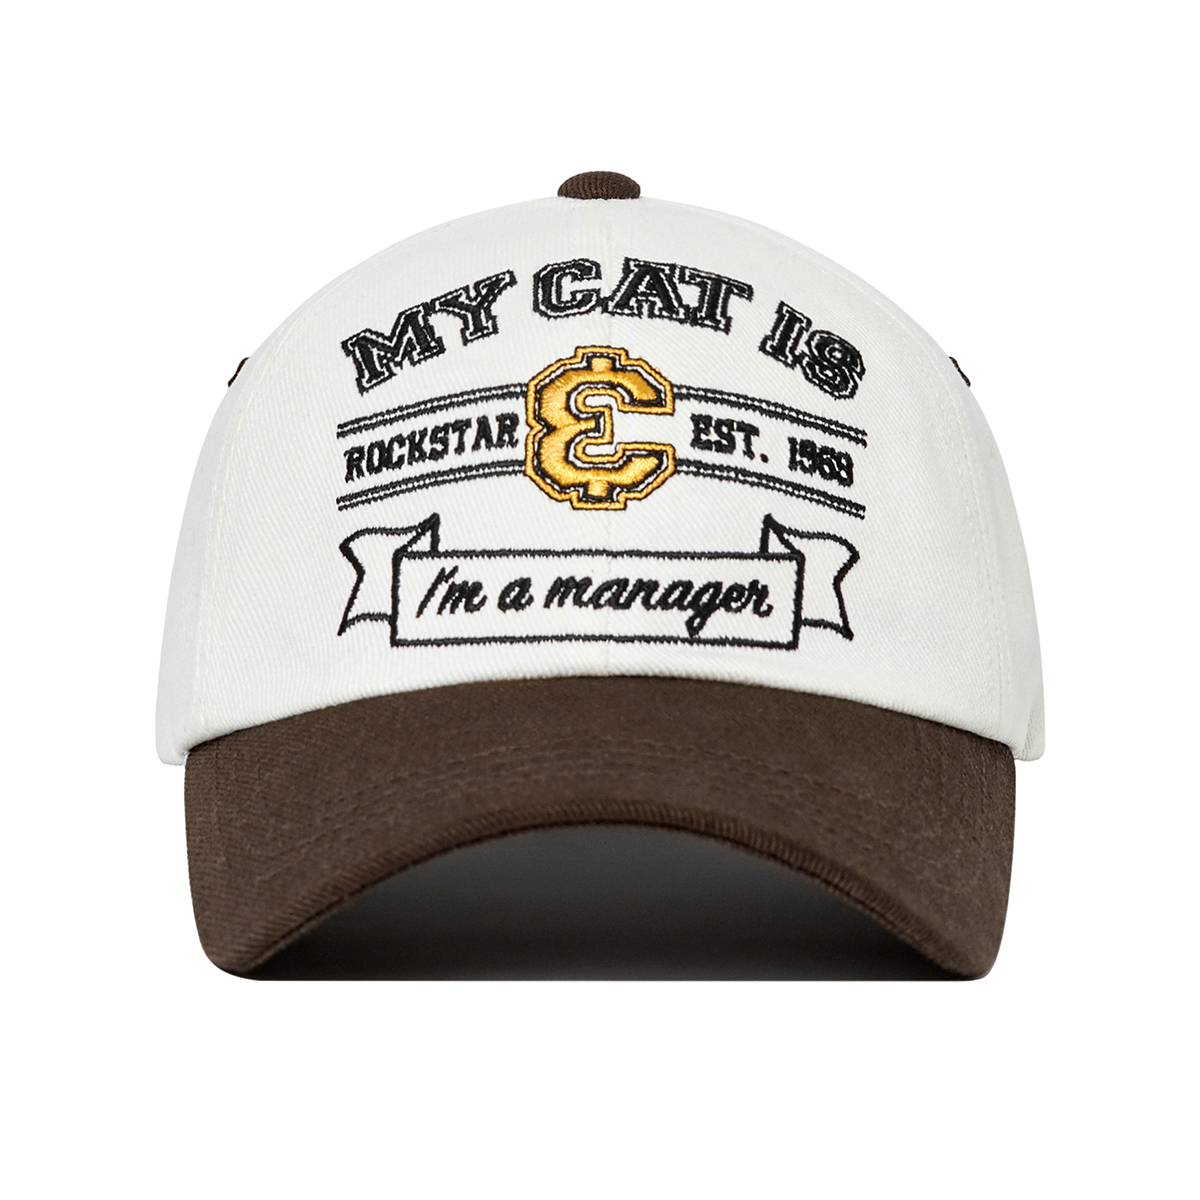 My cat is Rockstar Baseball cap (Heritage ver.) (Ivory/Brown)